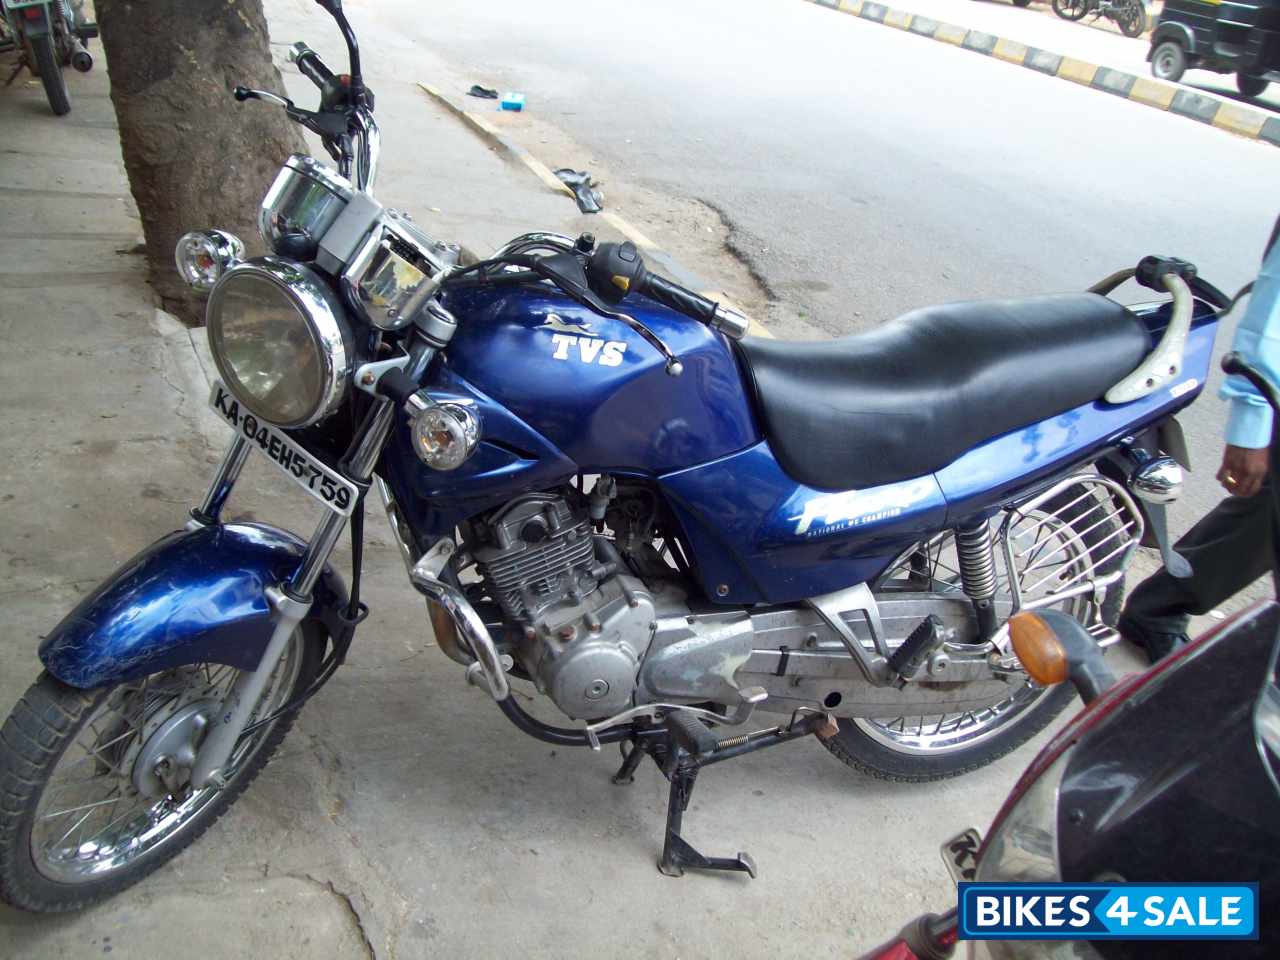 TVS Fiero FX Picture 1. Bike ID 89213. Bike located in Bangalore - Bikes4Sale1280 x 960